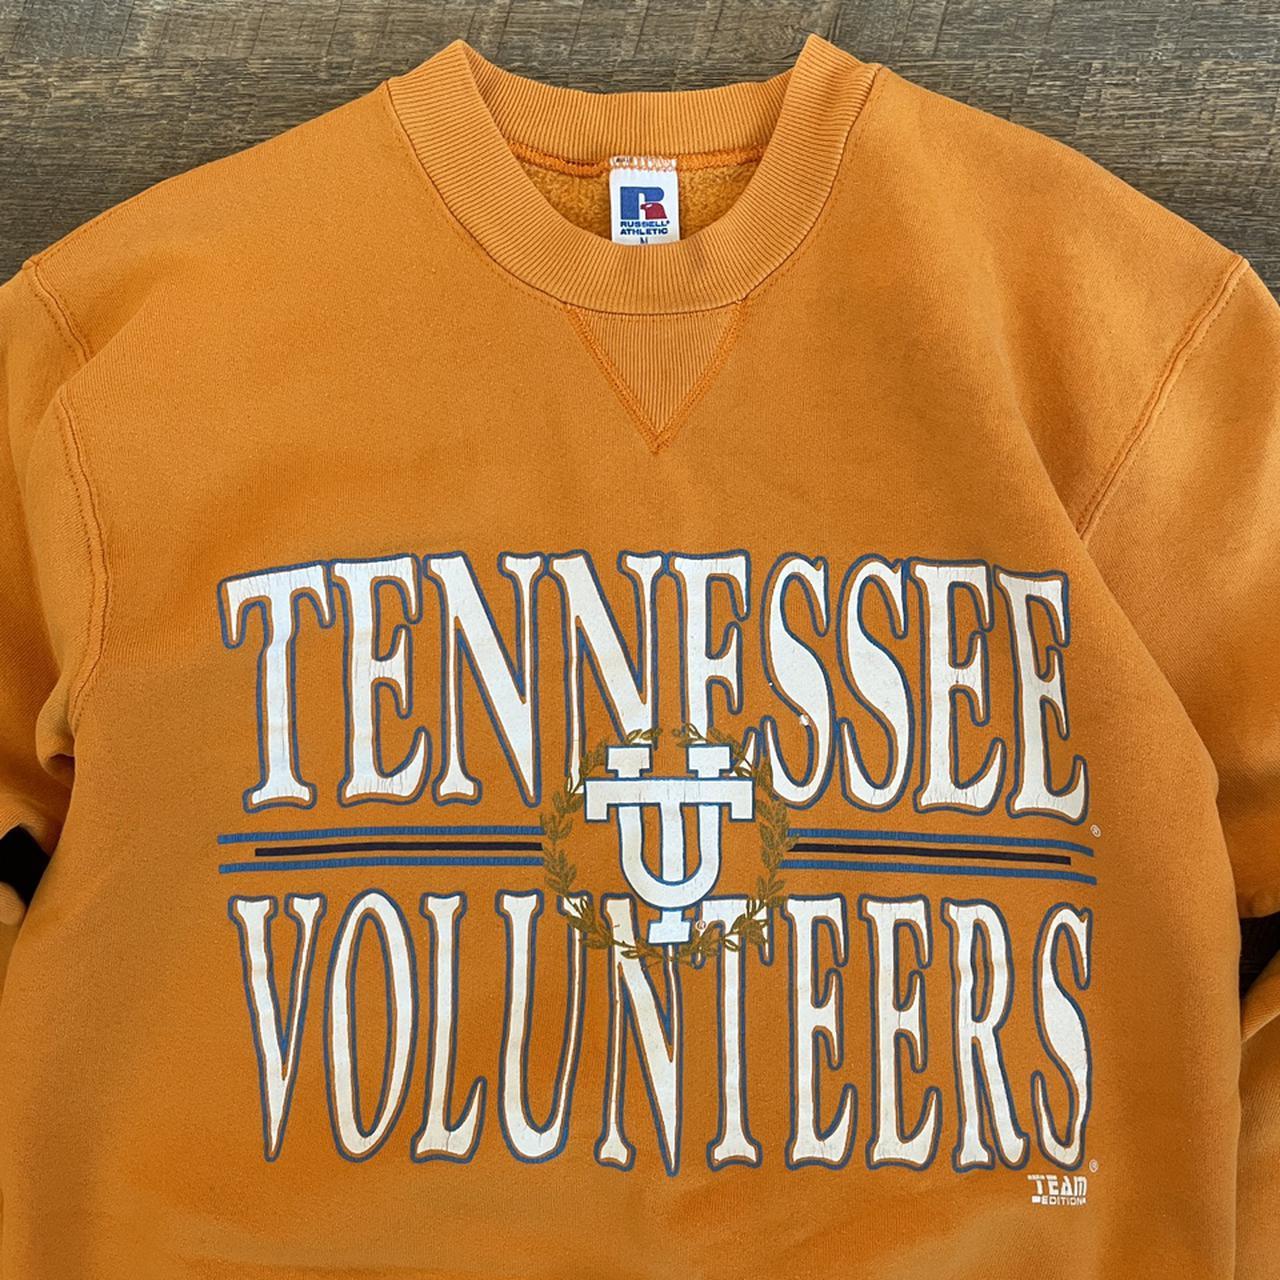 Product Image 2 - Vintage 1980’s Tennessee Volunteers Sweatshirt

Size